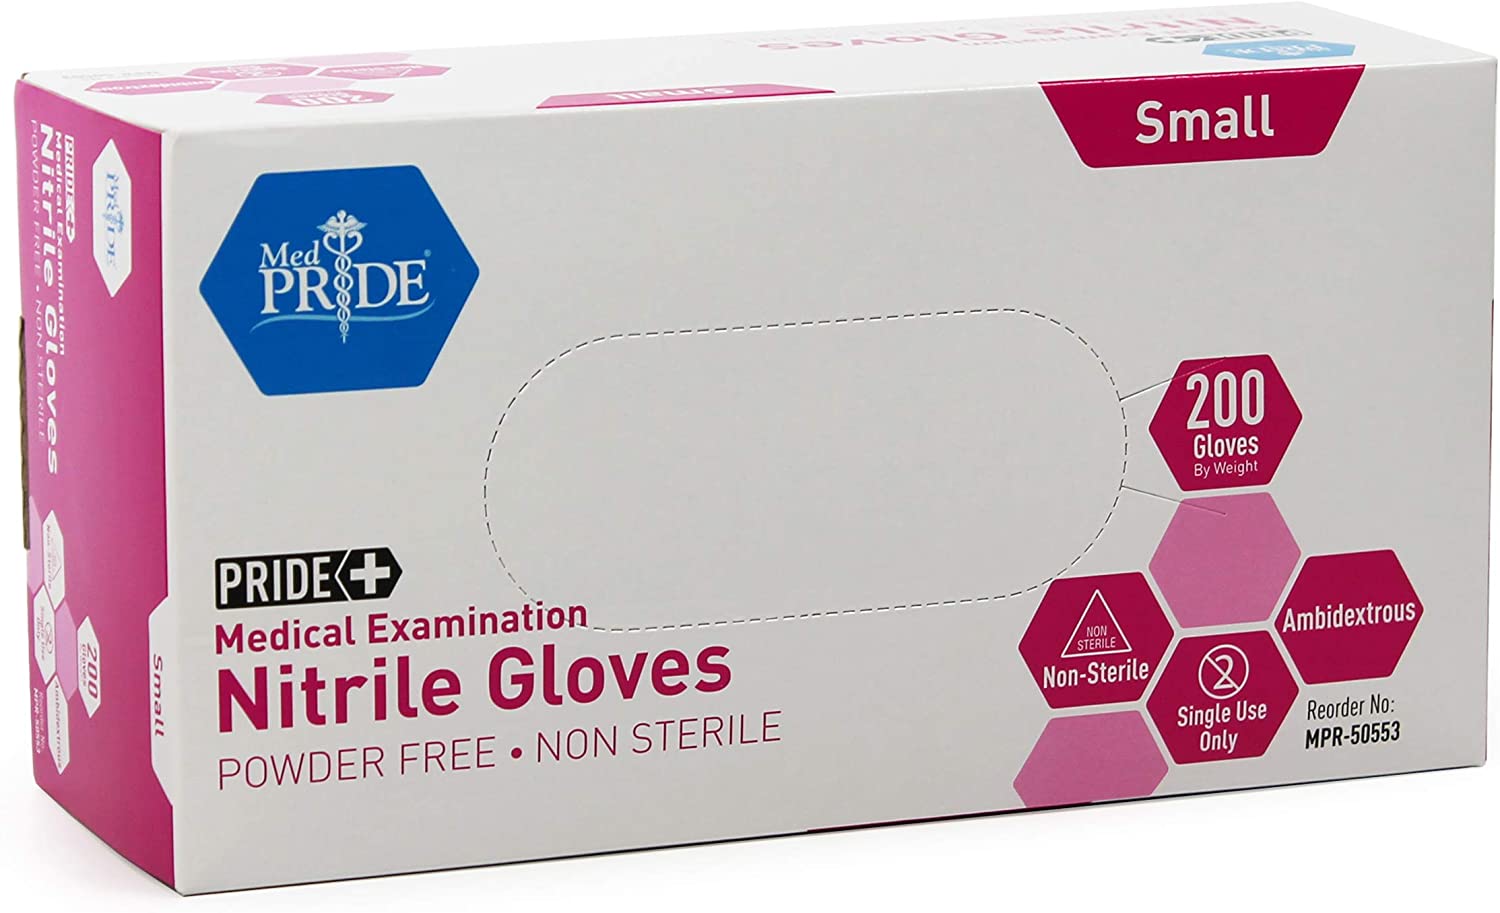 MedPRIDE Nitrile Latex & Powder Free Exam Gloves, Small